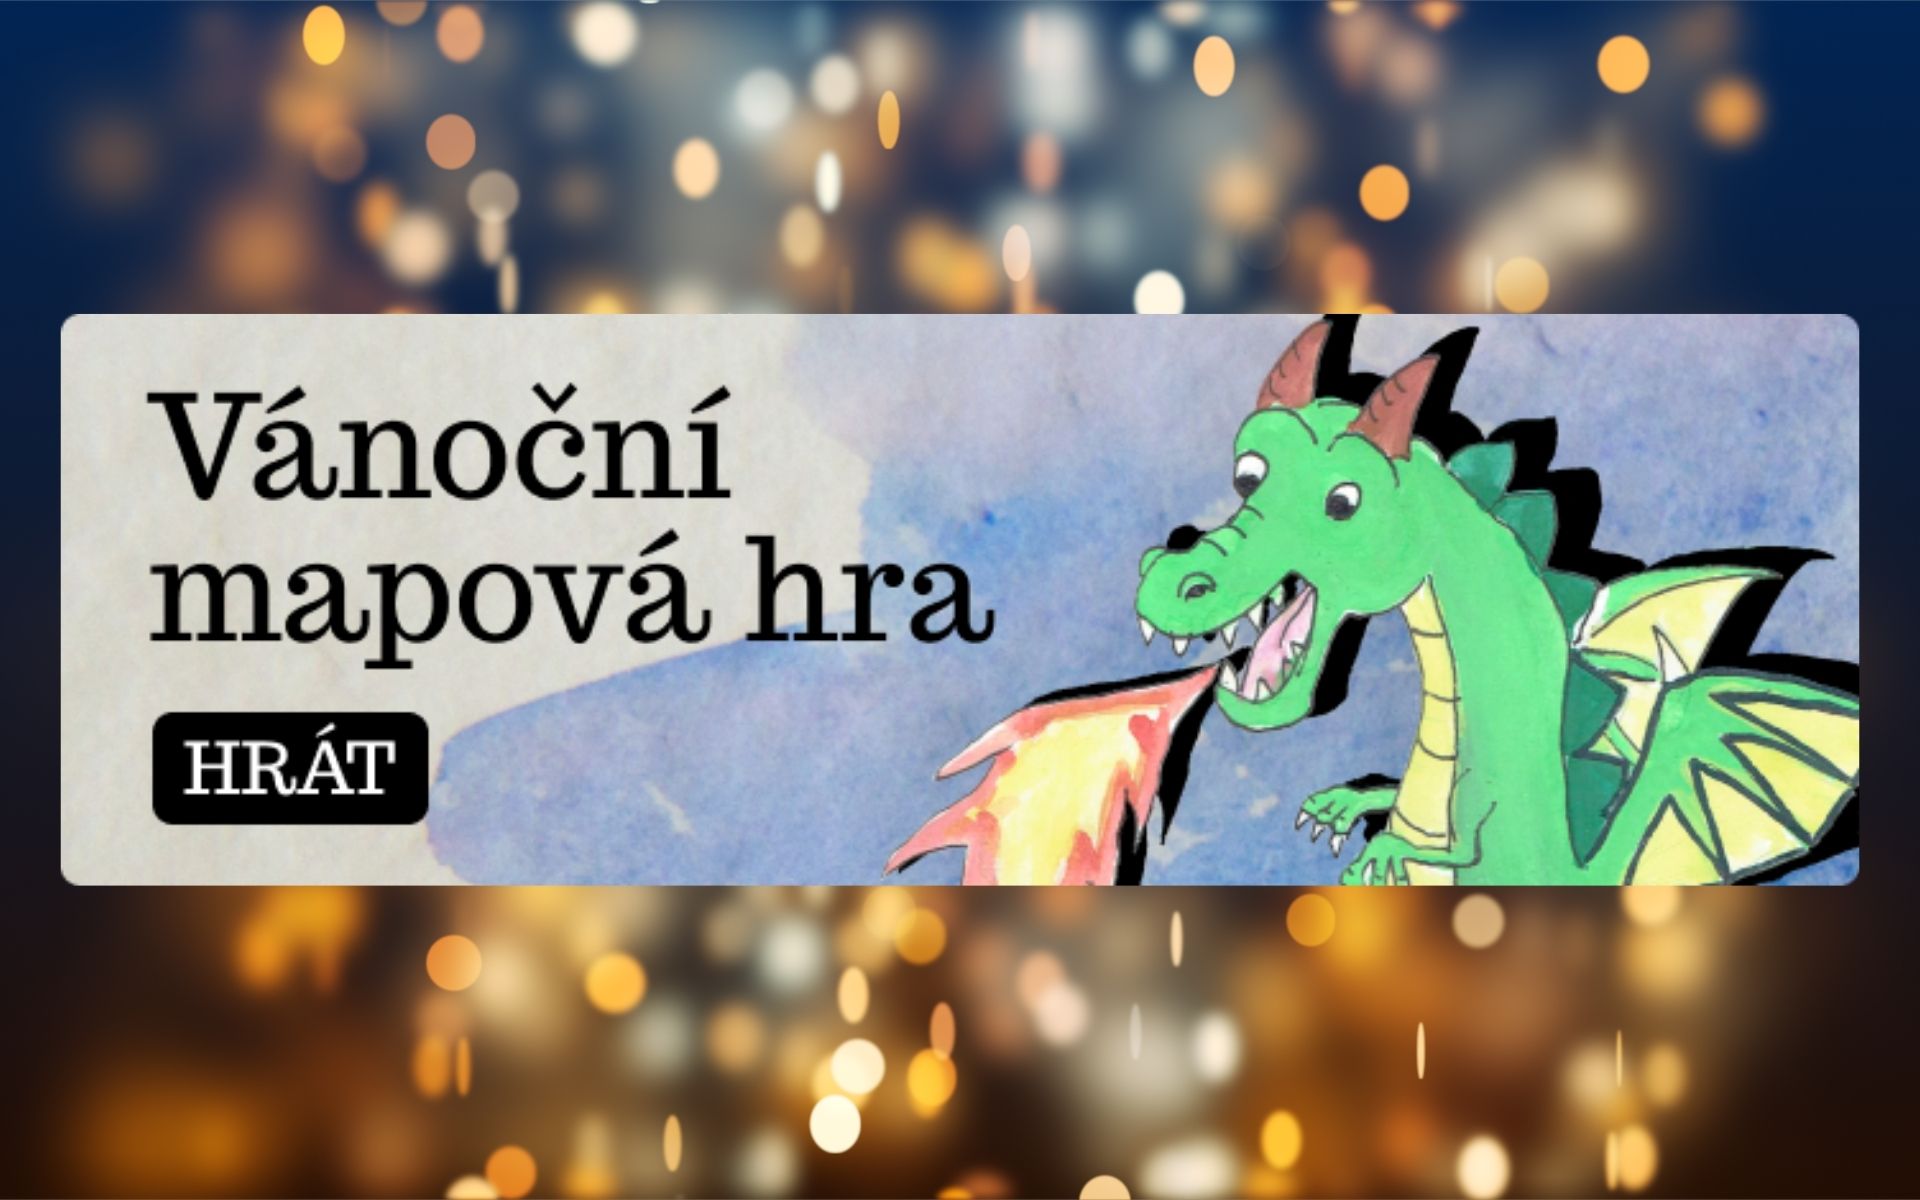 vanocni-hra-mapy-cz-2021-banner